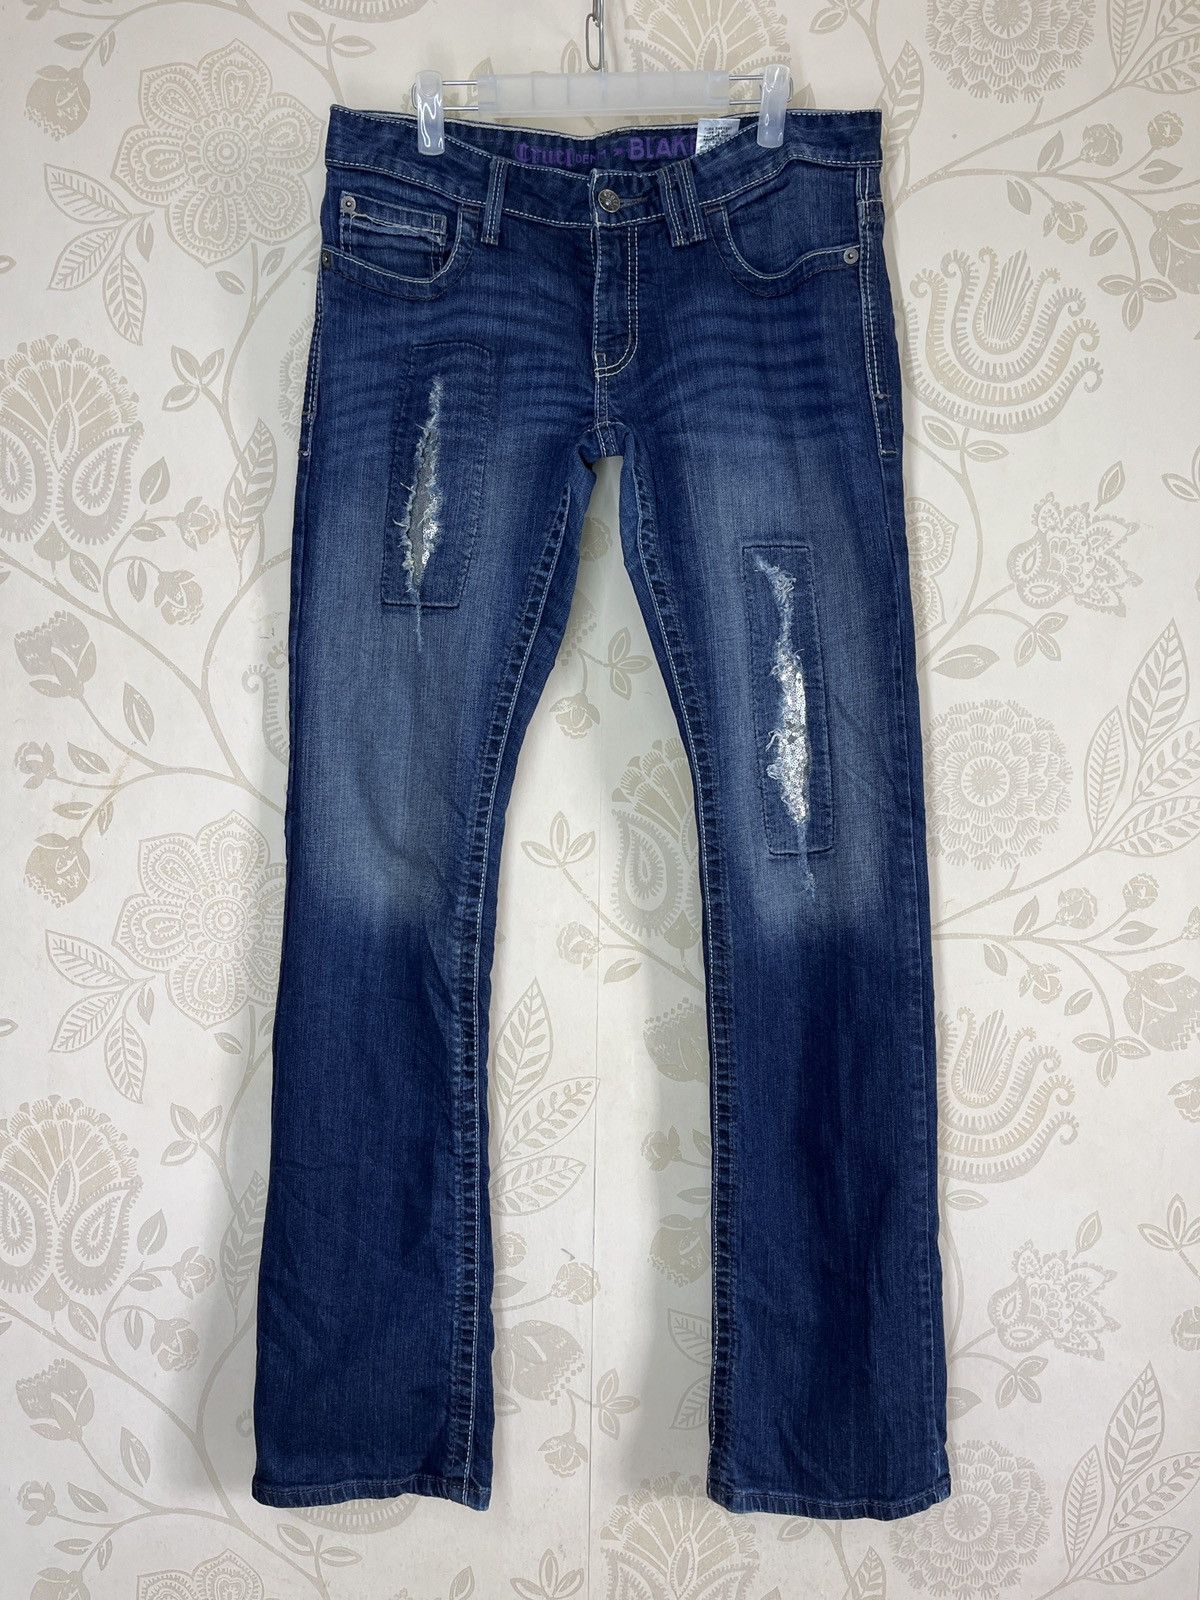 Vintage - Cruel Denim Blake Rocky Mountain Jeans Distressed - 1